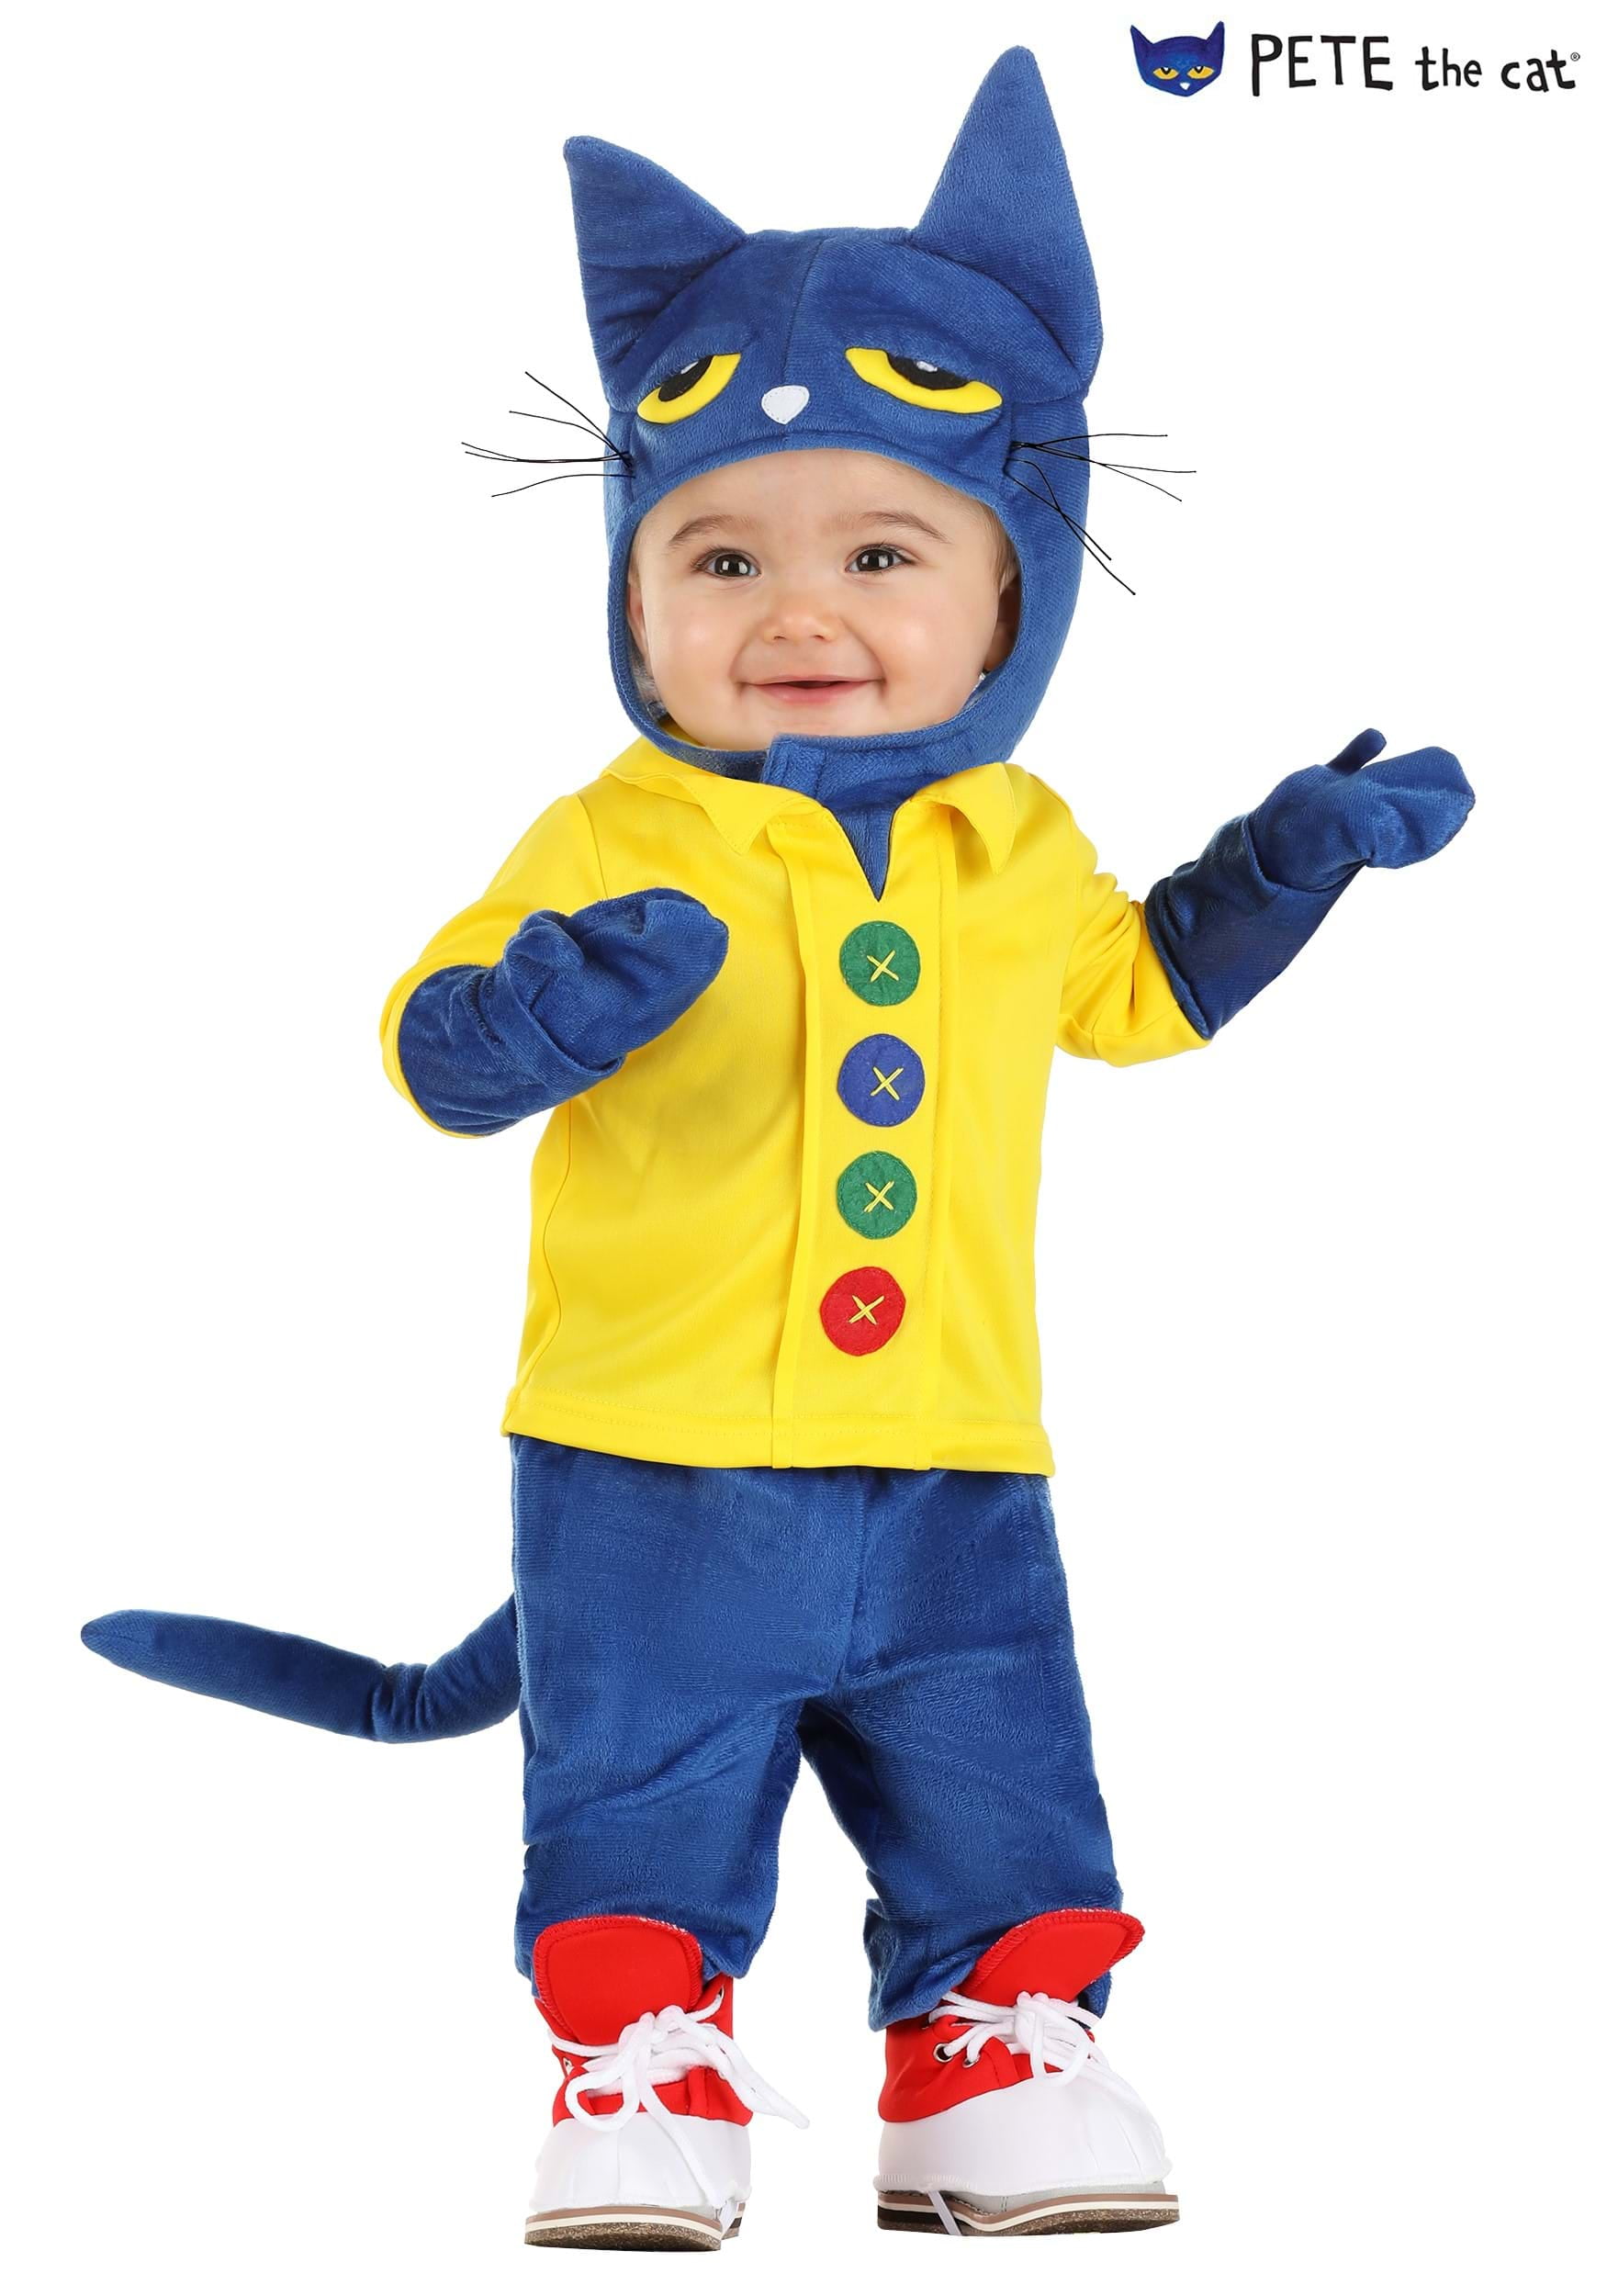 Infant Pete the Cat Costume - Walmart.com